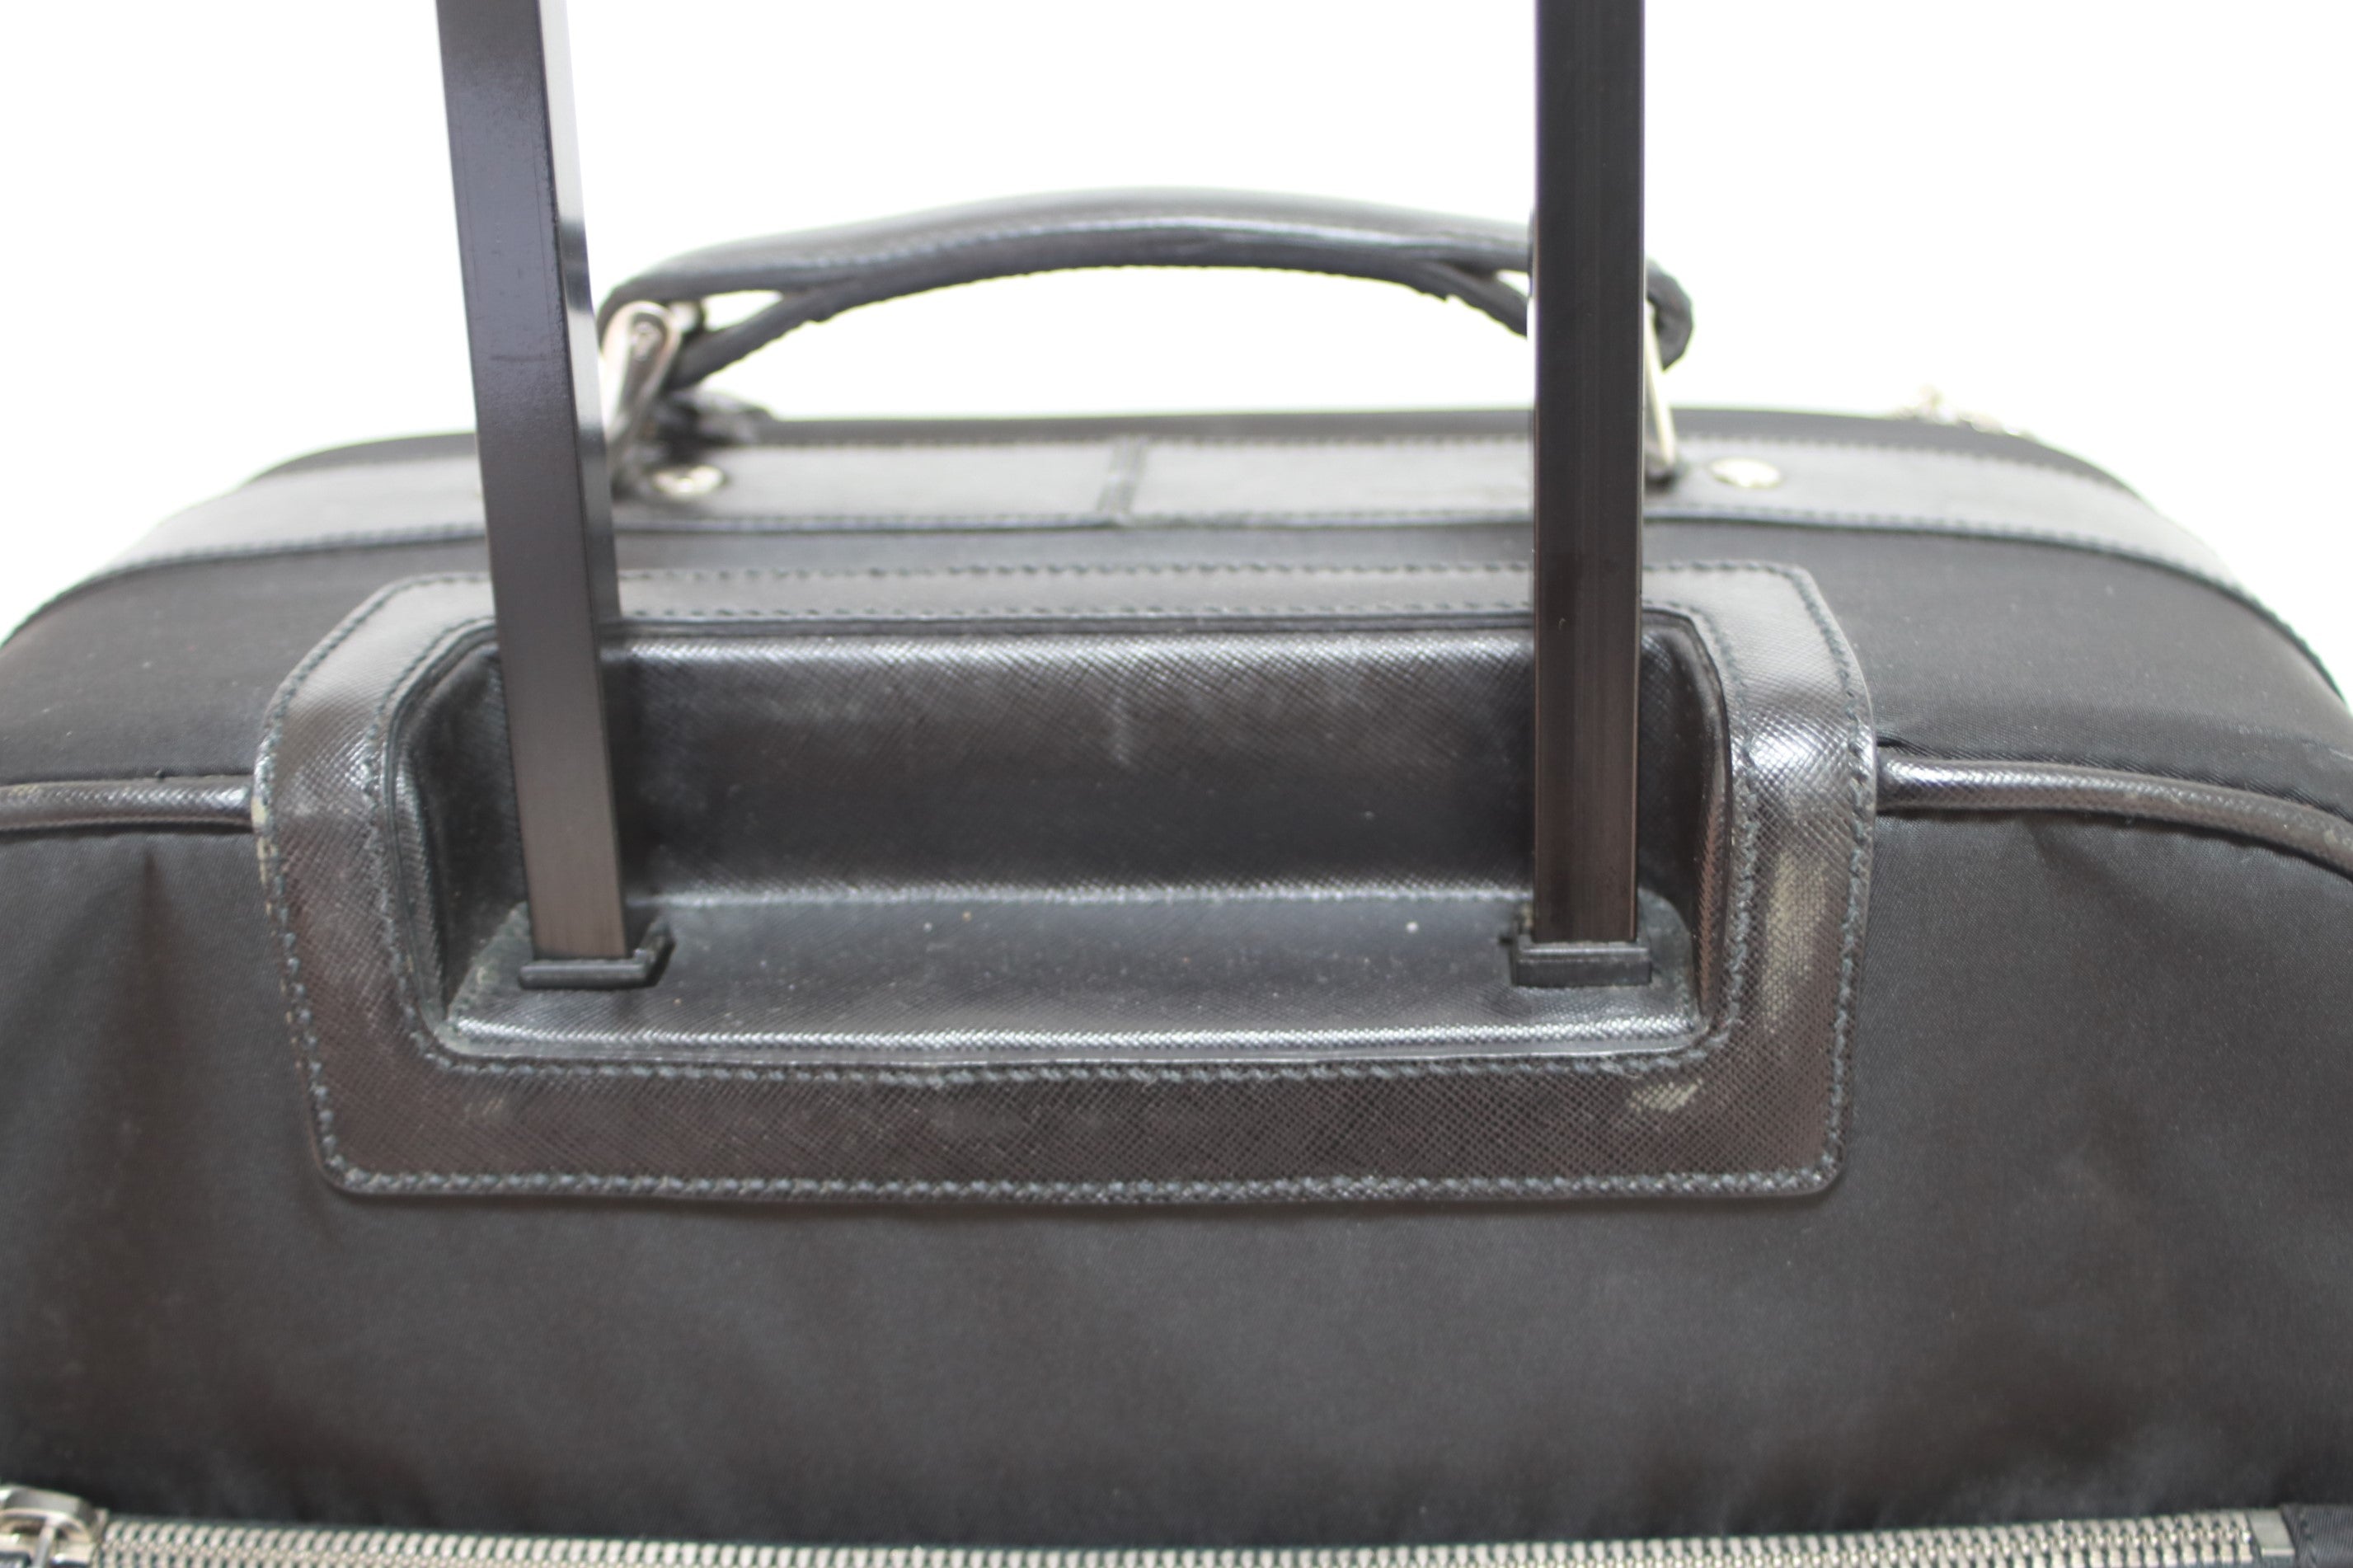 Prada Rolling Luggage Used (7533)